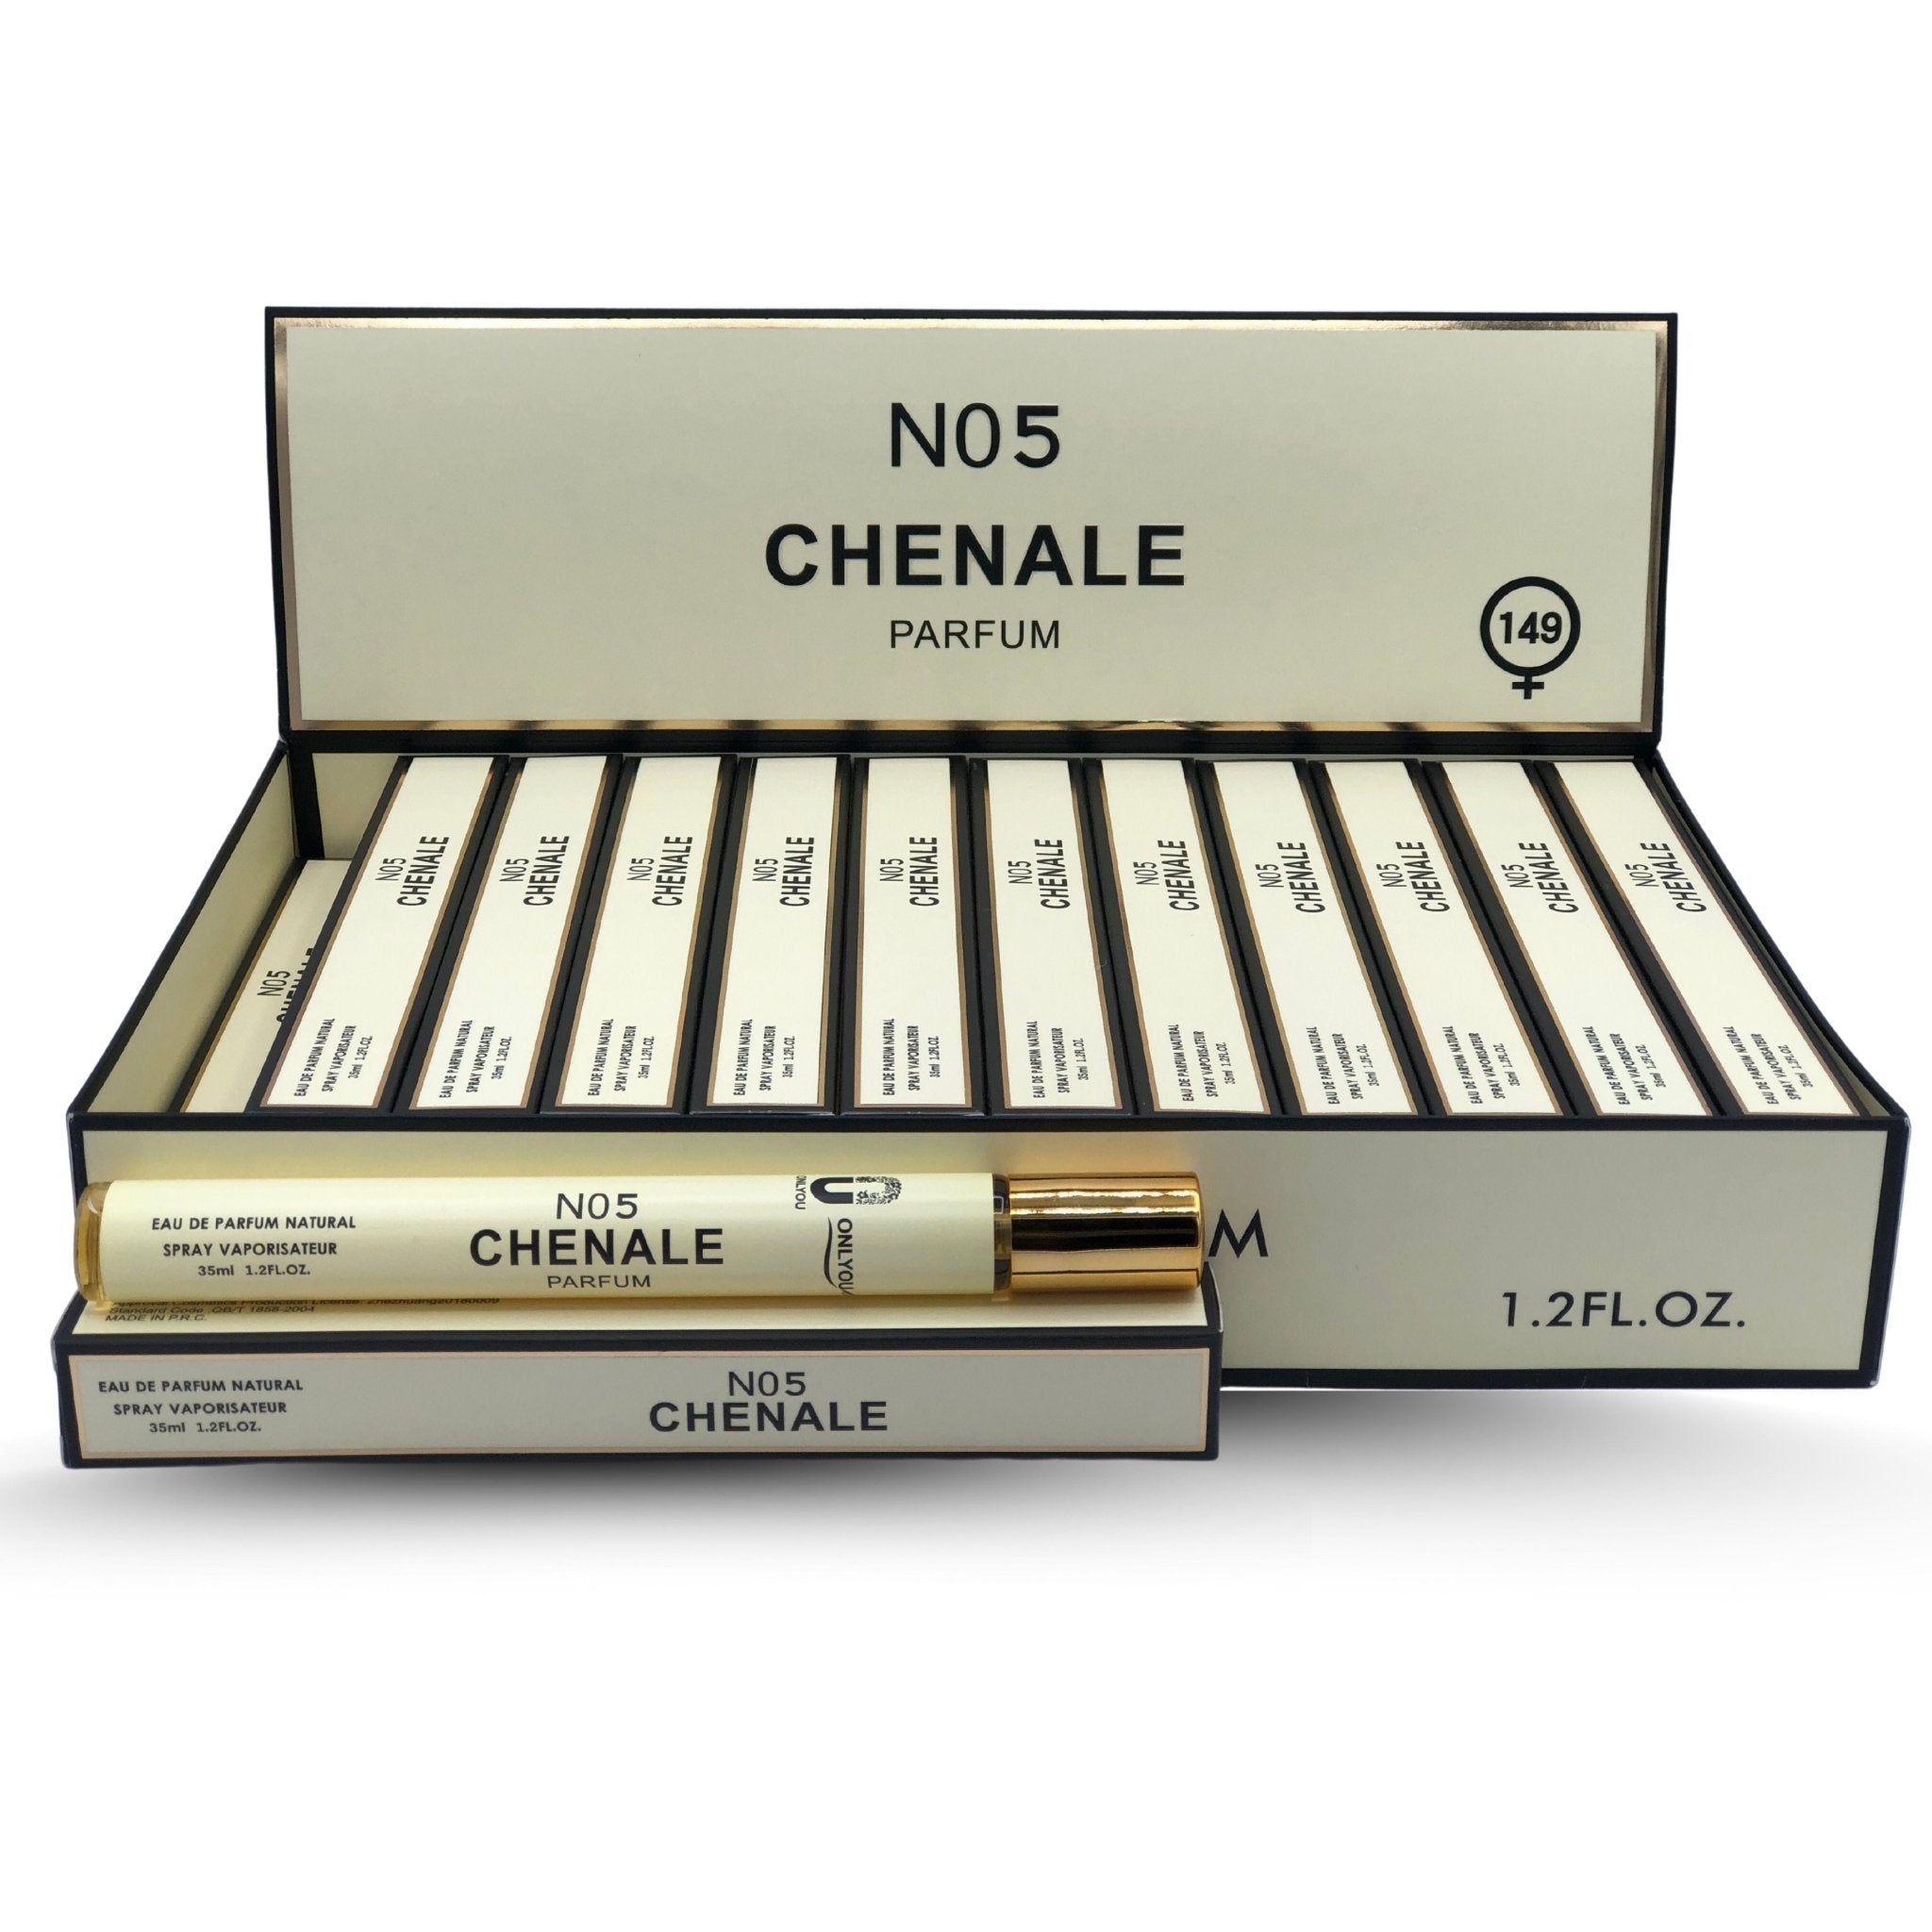 Perfume Tubular No5 Chenale - AjSilesOLU909-149